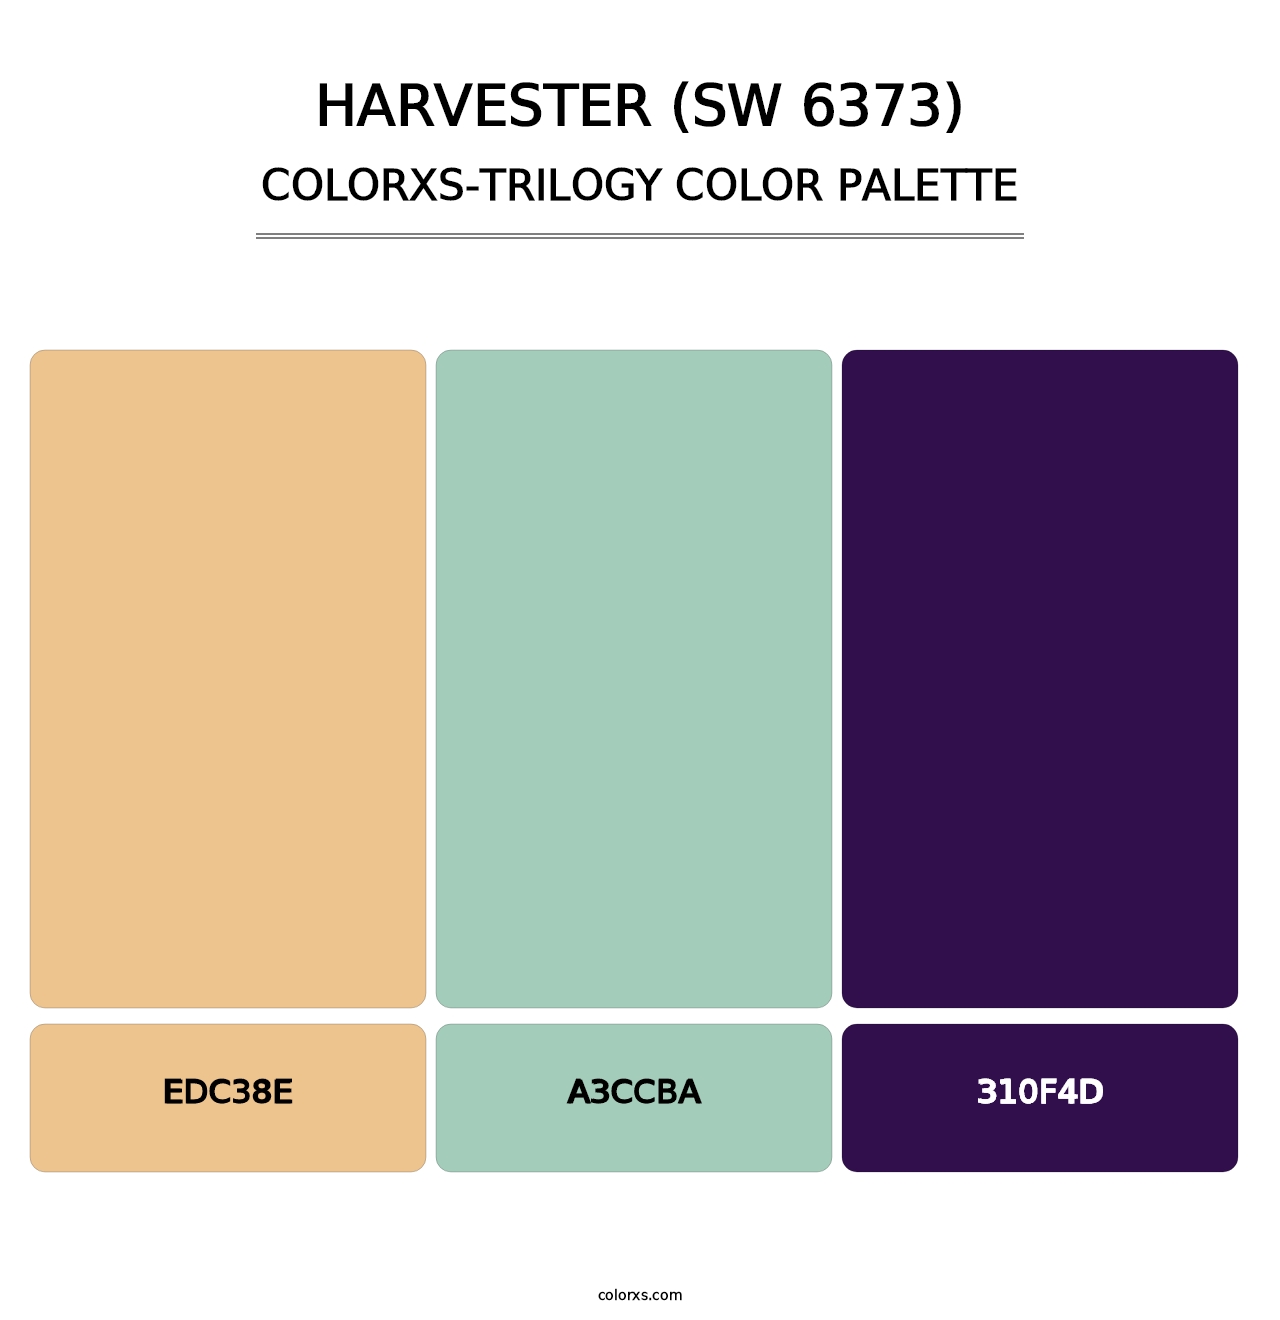 Harvester (SW 6373) - Colorxs Trilogy Palette